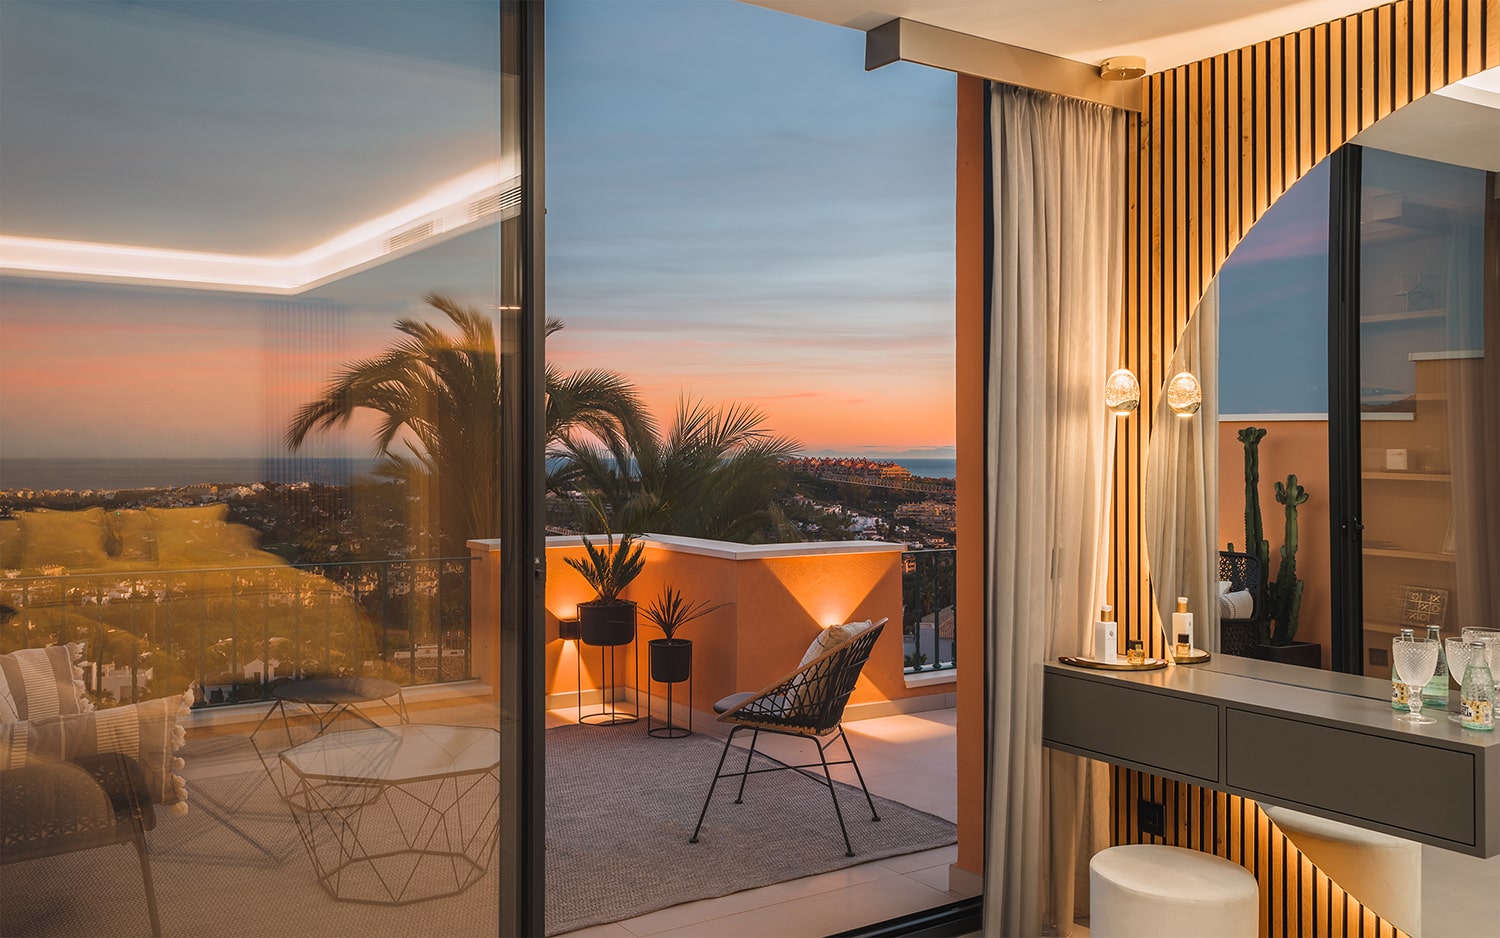 Luxury Villa for Sale in Marbella Awaits: Explore Your Dream Home